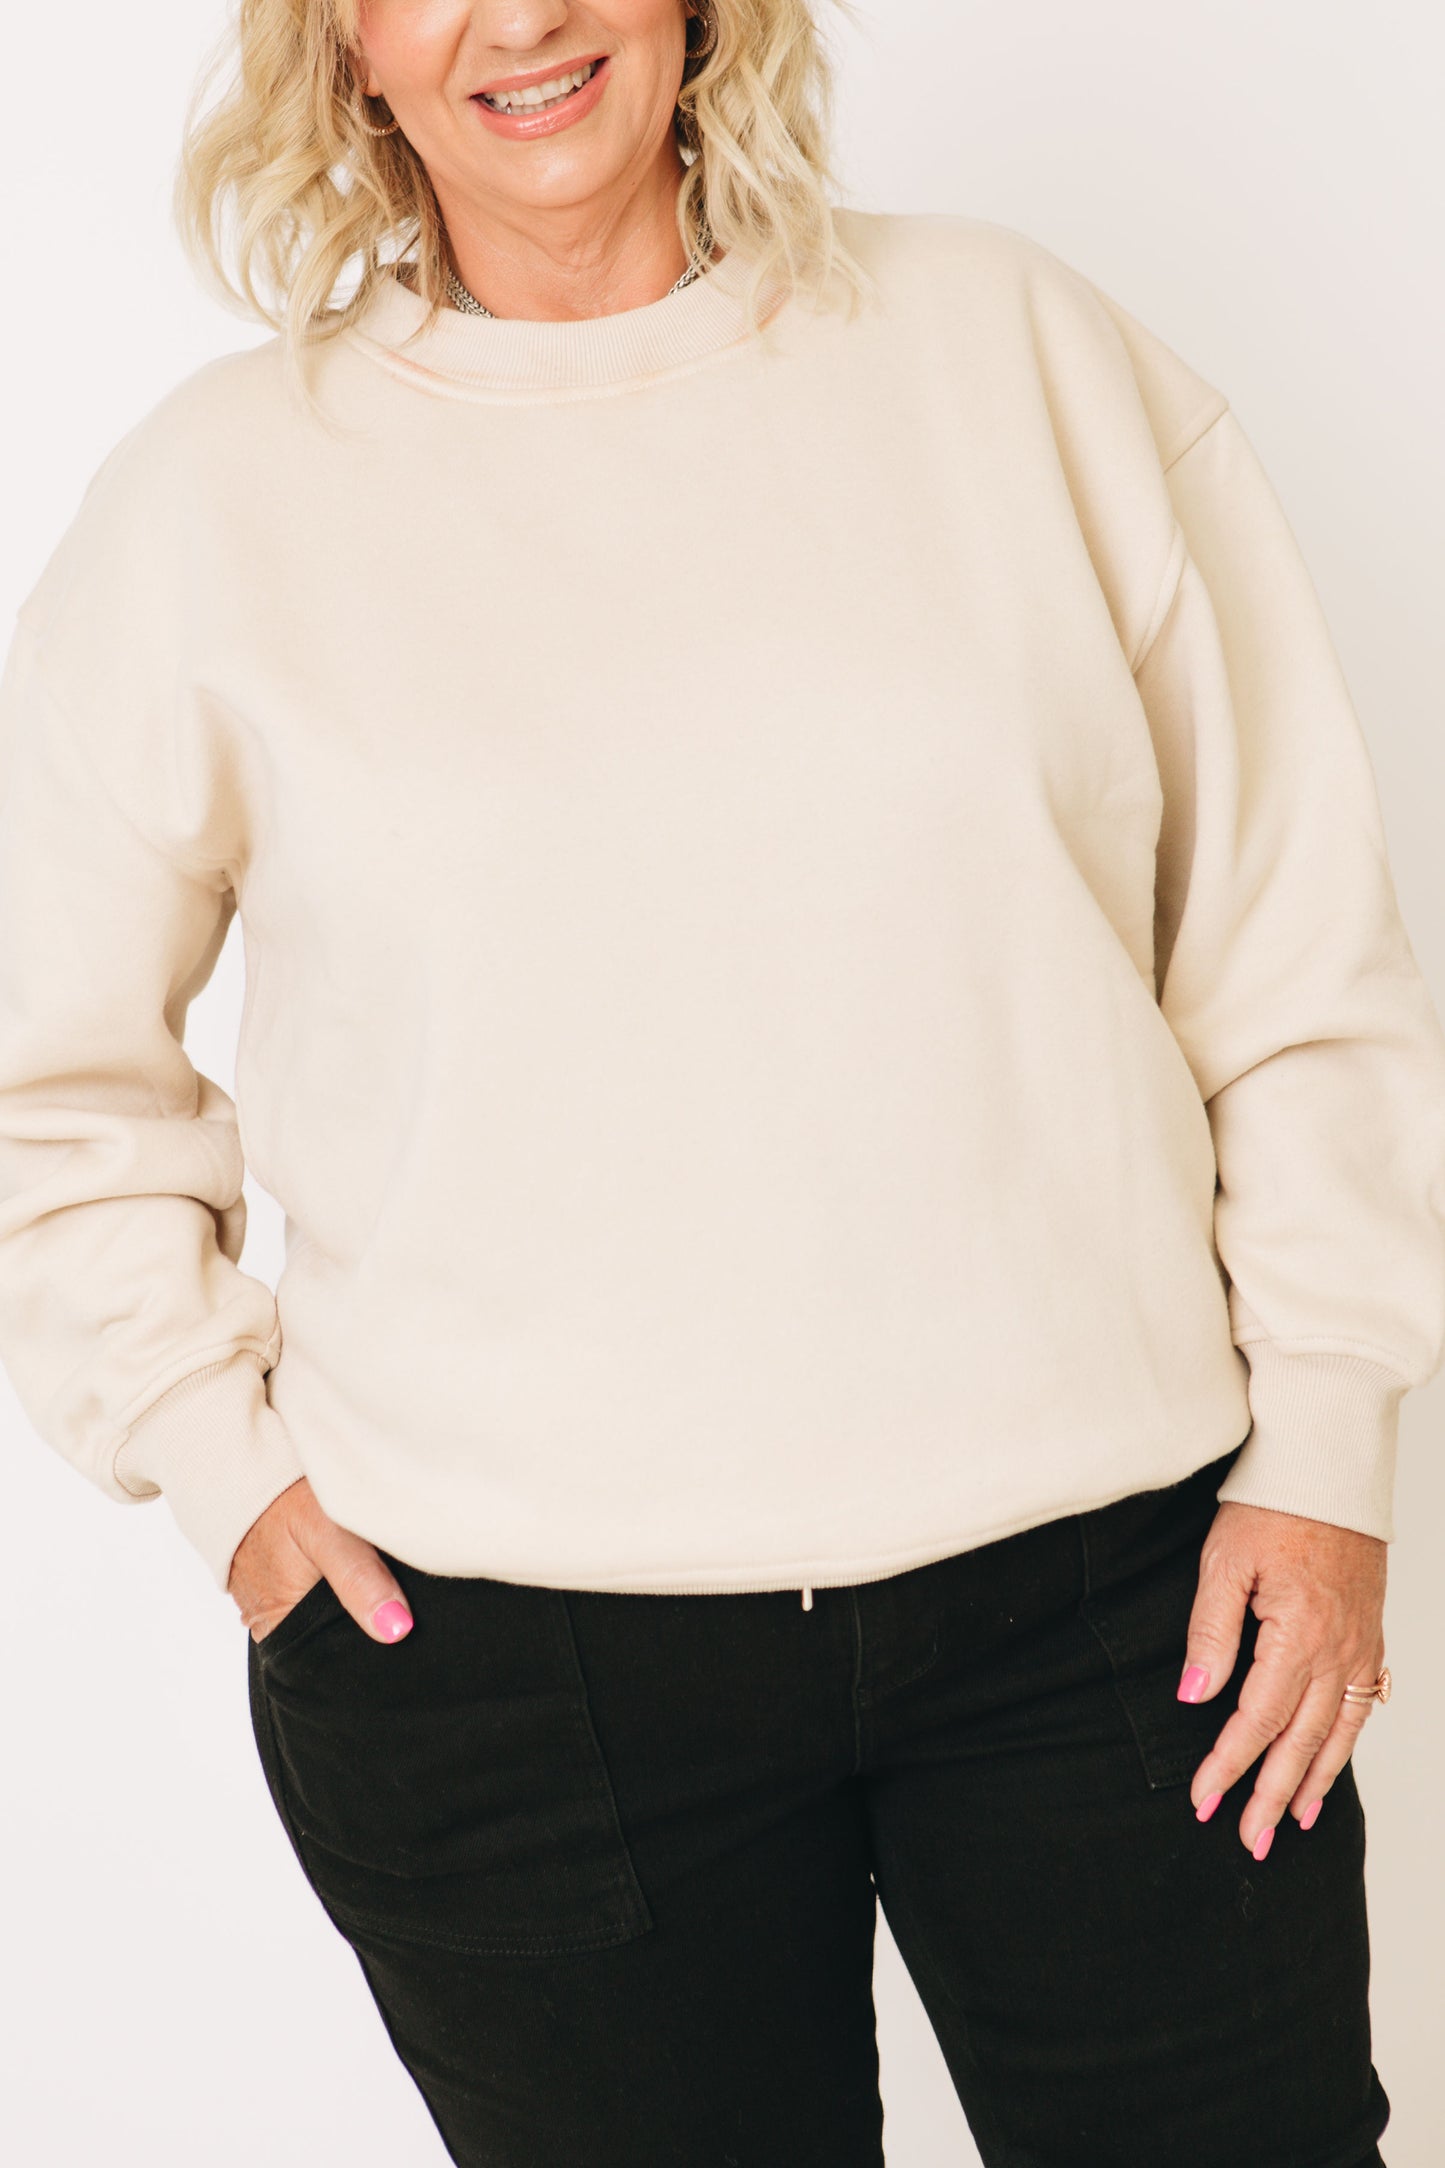 RESTOCK EXPECTED 10/2 - Be Yourself Oversized Luxe Sweatshirt (S-3XL)